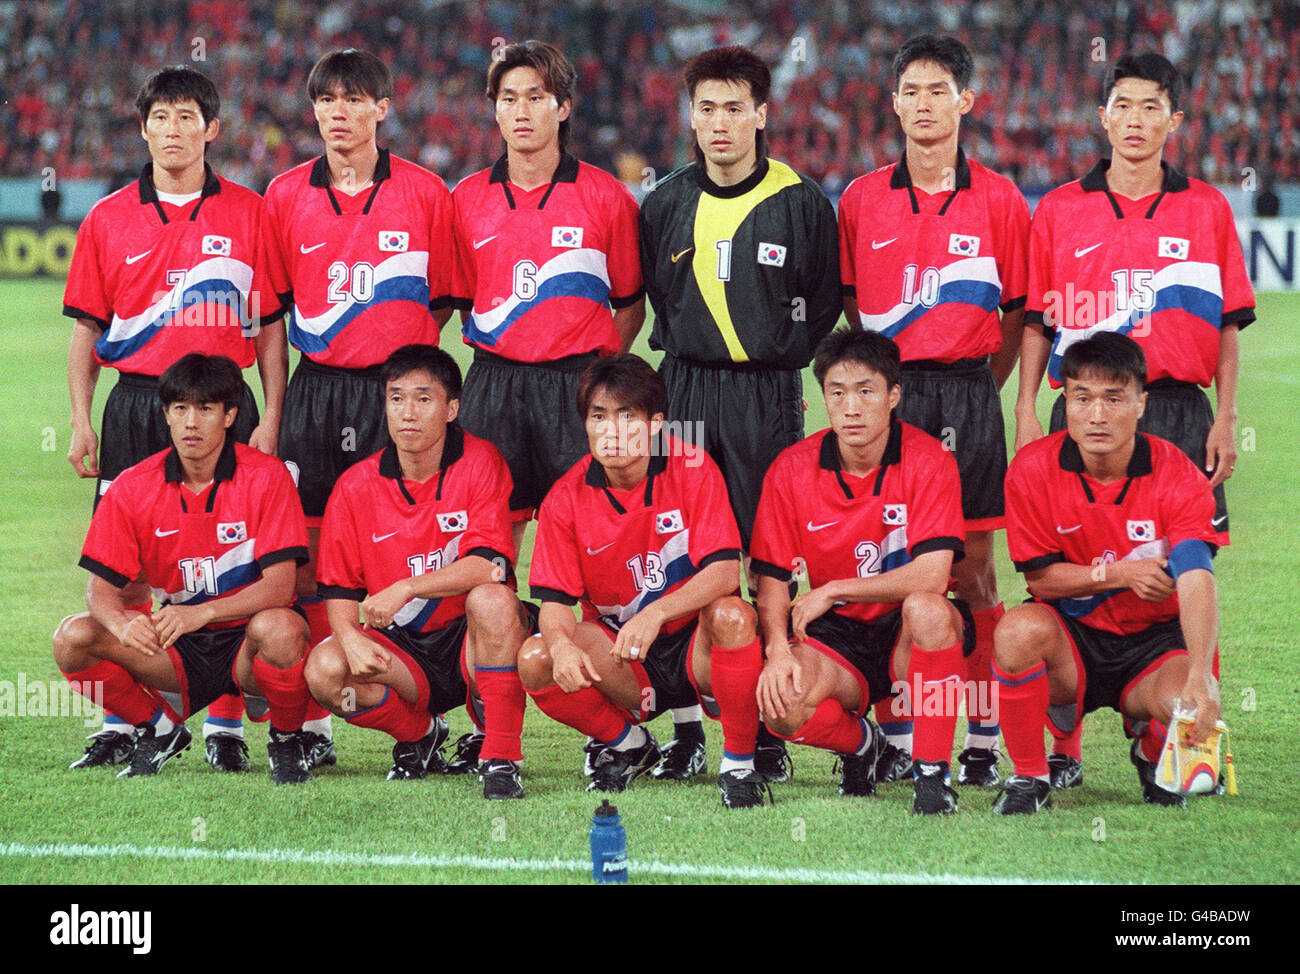 World Cup 1998 AFP PHOTO South Korea (L-R standing) Jung-Woon Ko, Myung-Bo Hong, Sang-Chul Yoo, Byung-Ji Kim, Yong-Soo Choi, Sang-Yoon Lee (L-R front row) Jung-Won Seo, Seok-Ju Ha, Tae-Young Kim, Ki-Hyung Lee, Young-Il Choi AFP/KIM Jae-Hwan Cor e du Sud (de G D debout) Jung-Woon Ko, Myung-Bo Hong, Sang-Chul Yoo, Byung-Ji Kim, Yong-Soo Choi, Sang-Yoon Lee (de G D accroupis) Jung-Won Seo, Seok-Ju Ha, Tae-Young Kim, Ki-Hyung Lee, Young-Il Choi AFP/KIM Jae-Hwan Stock Photo